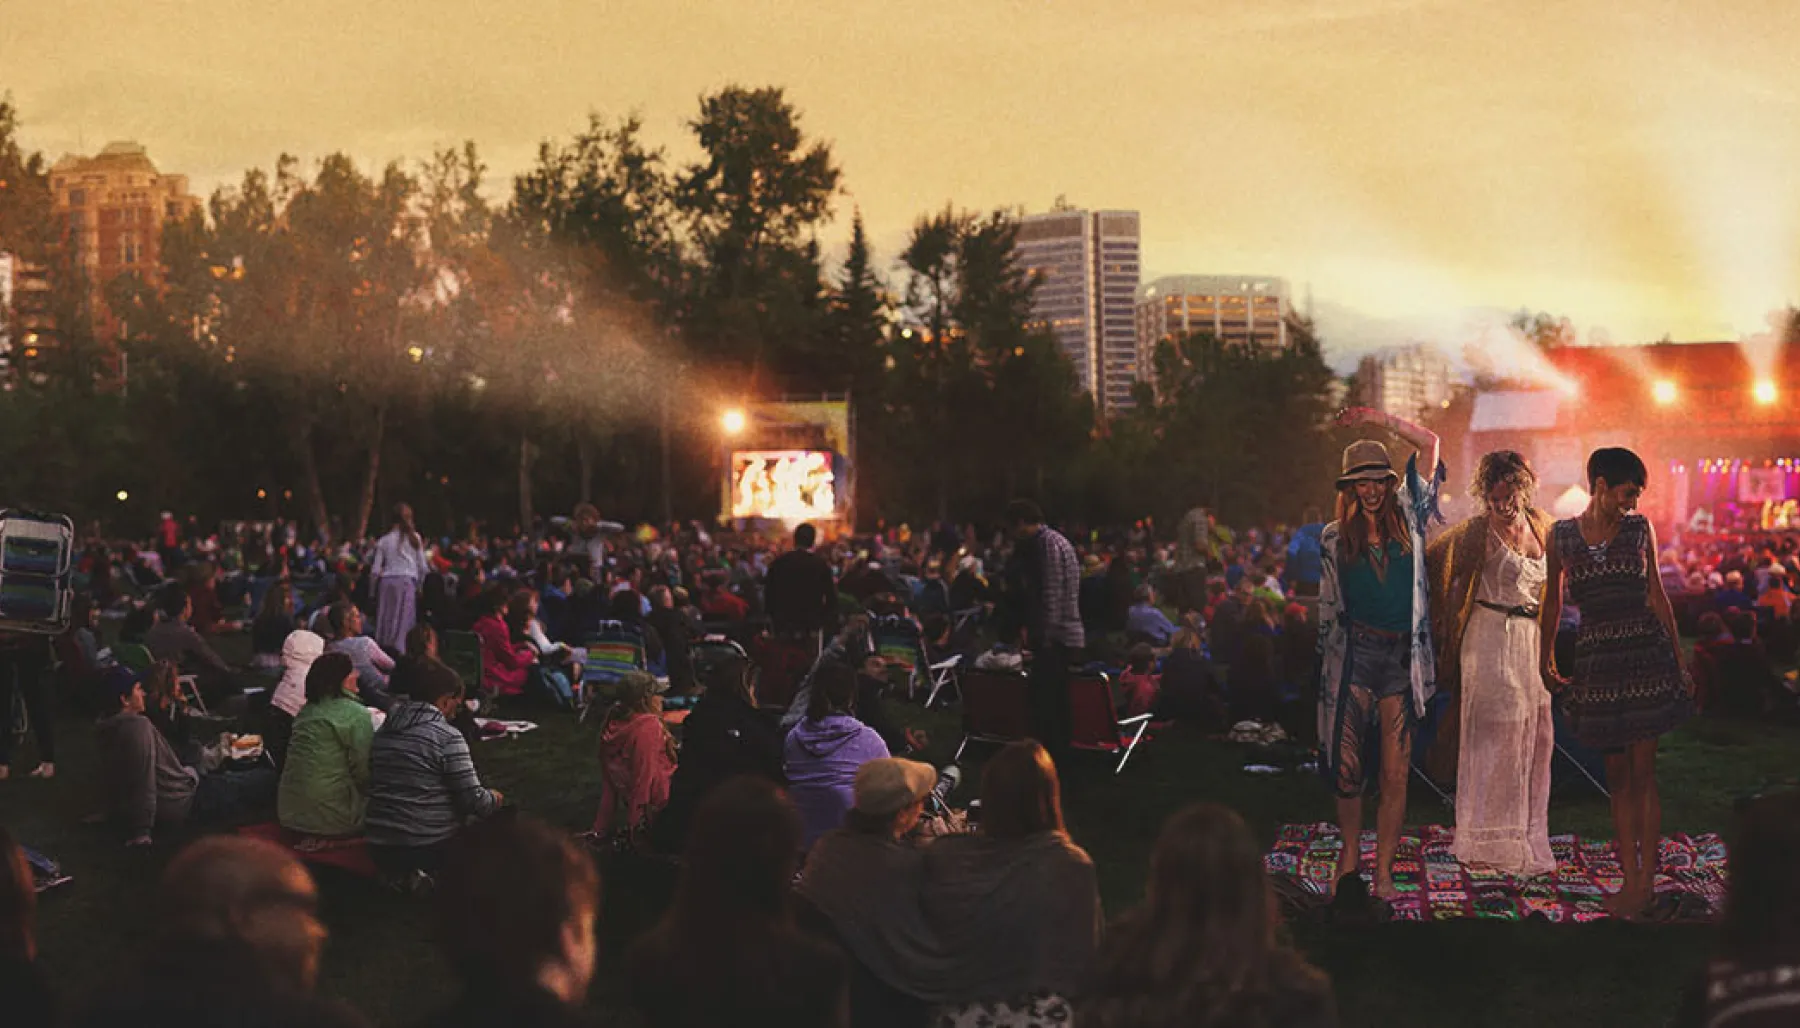 Crowd at Calgary Folk Festival during sunset